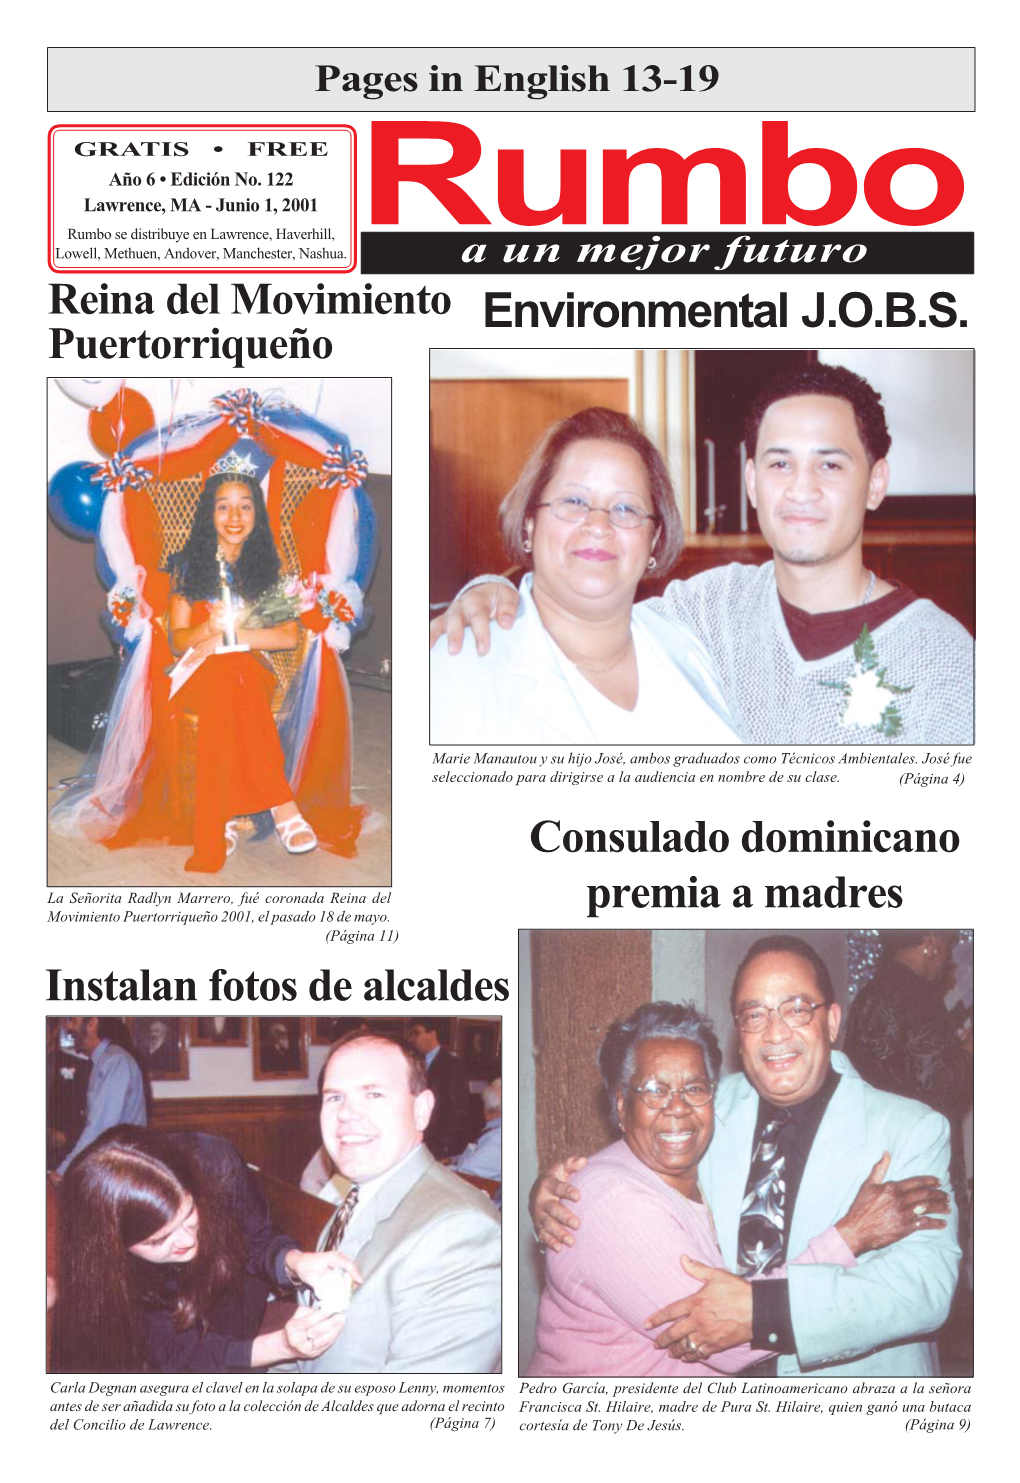 Environmental J.O.B.S. Puertorriqueño